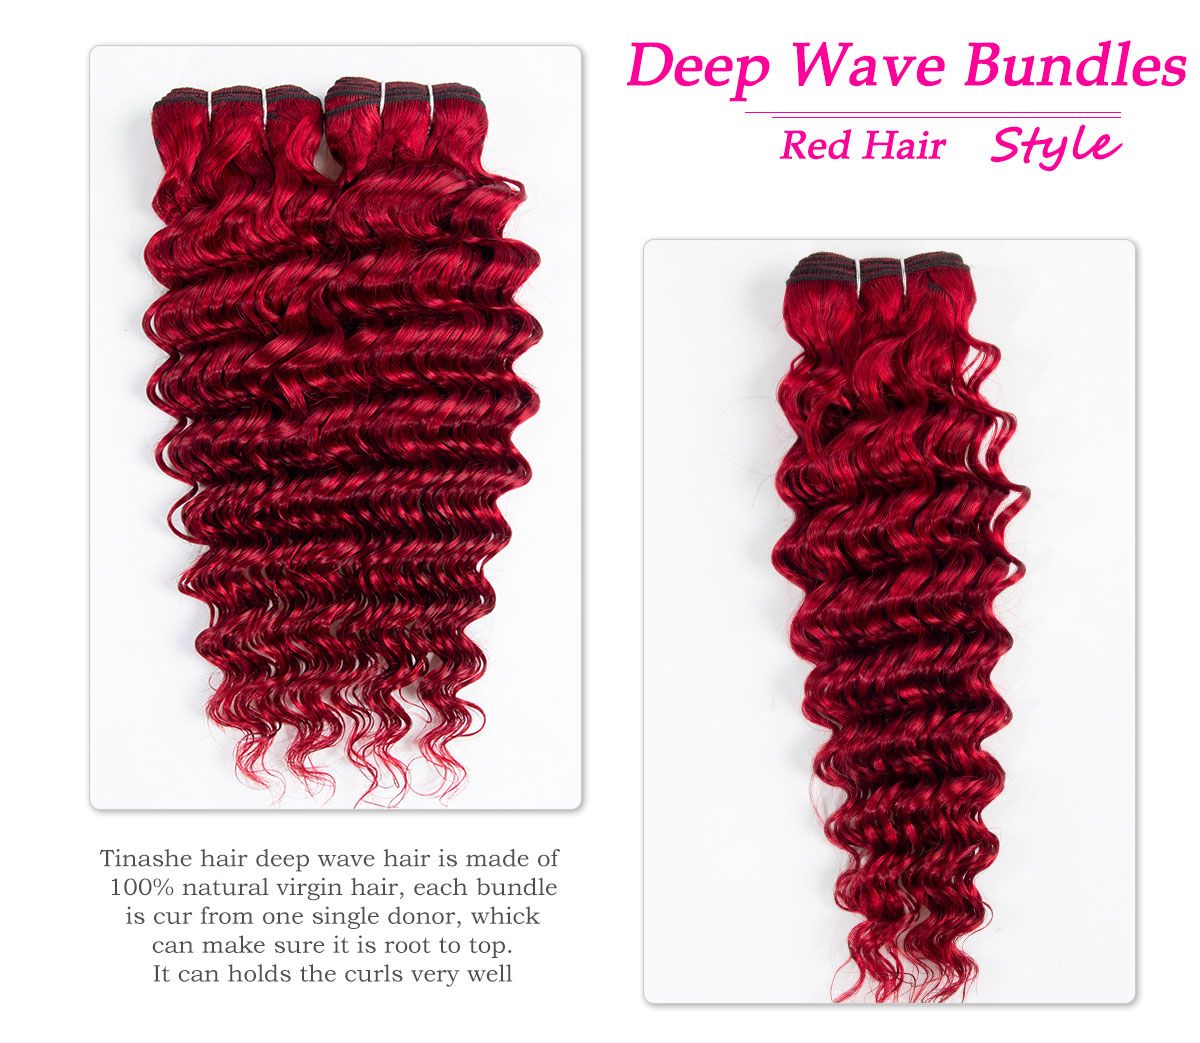 red deep wave bundles